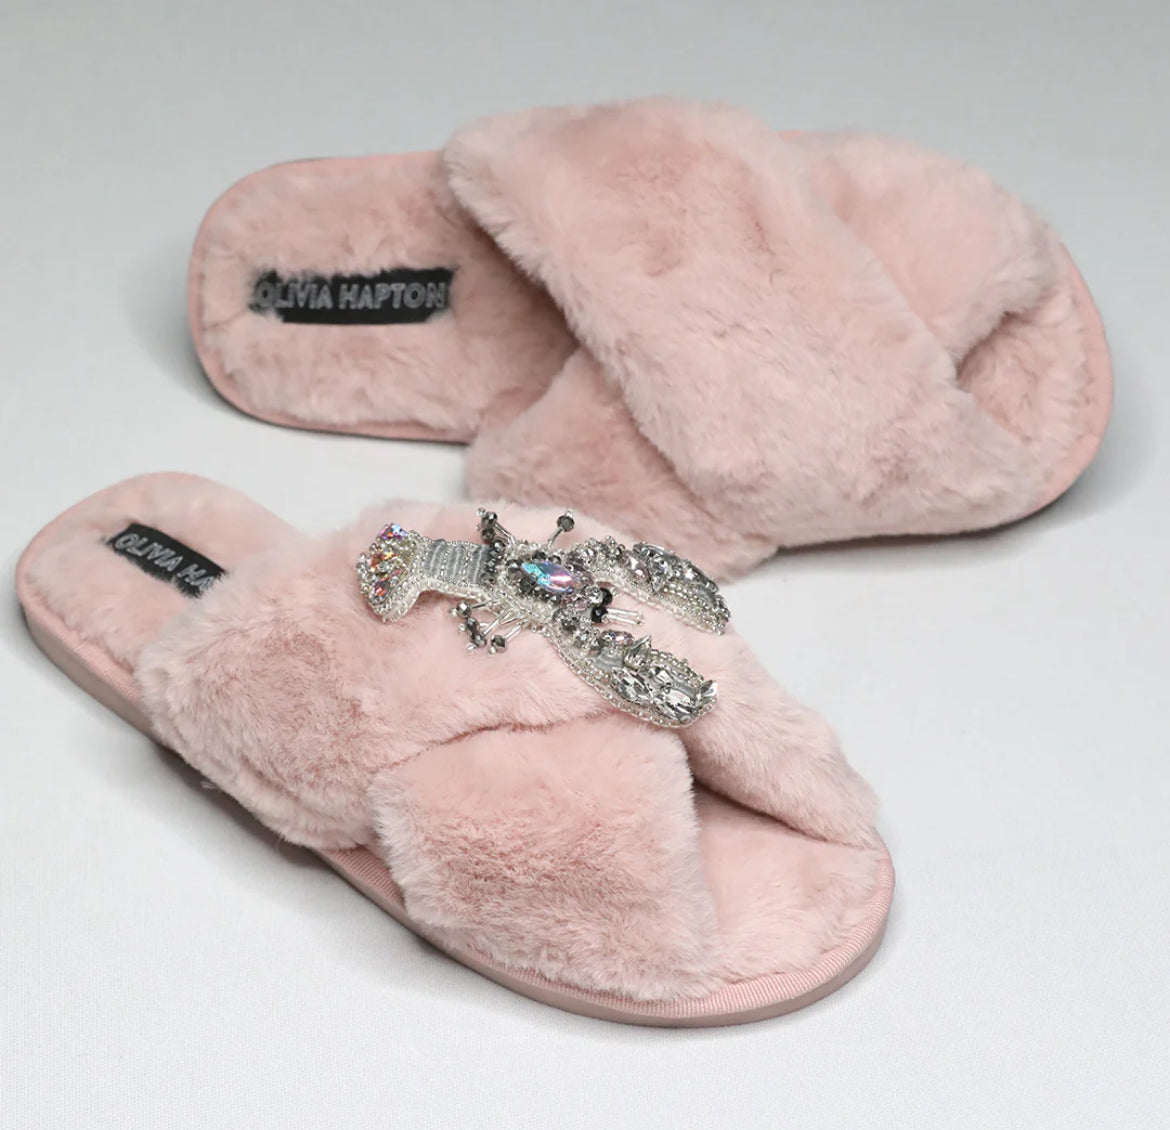 Olivia Hapton STAR pyjama, eye mask and slippers set